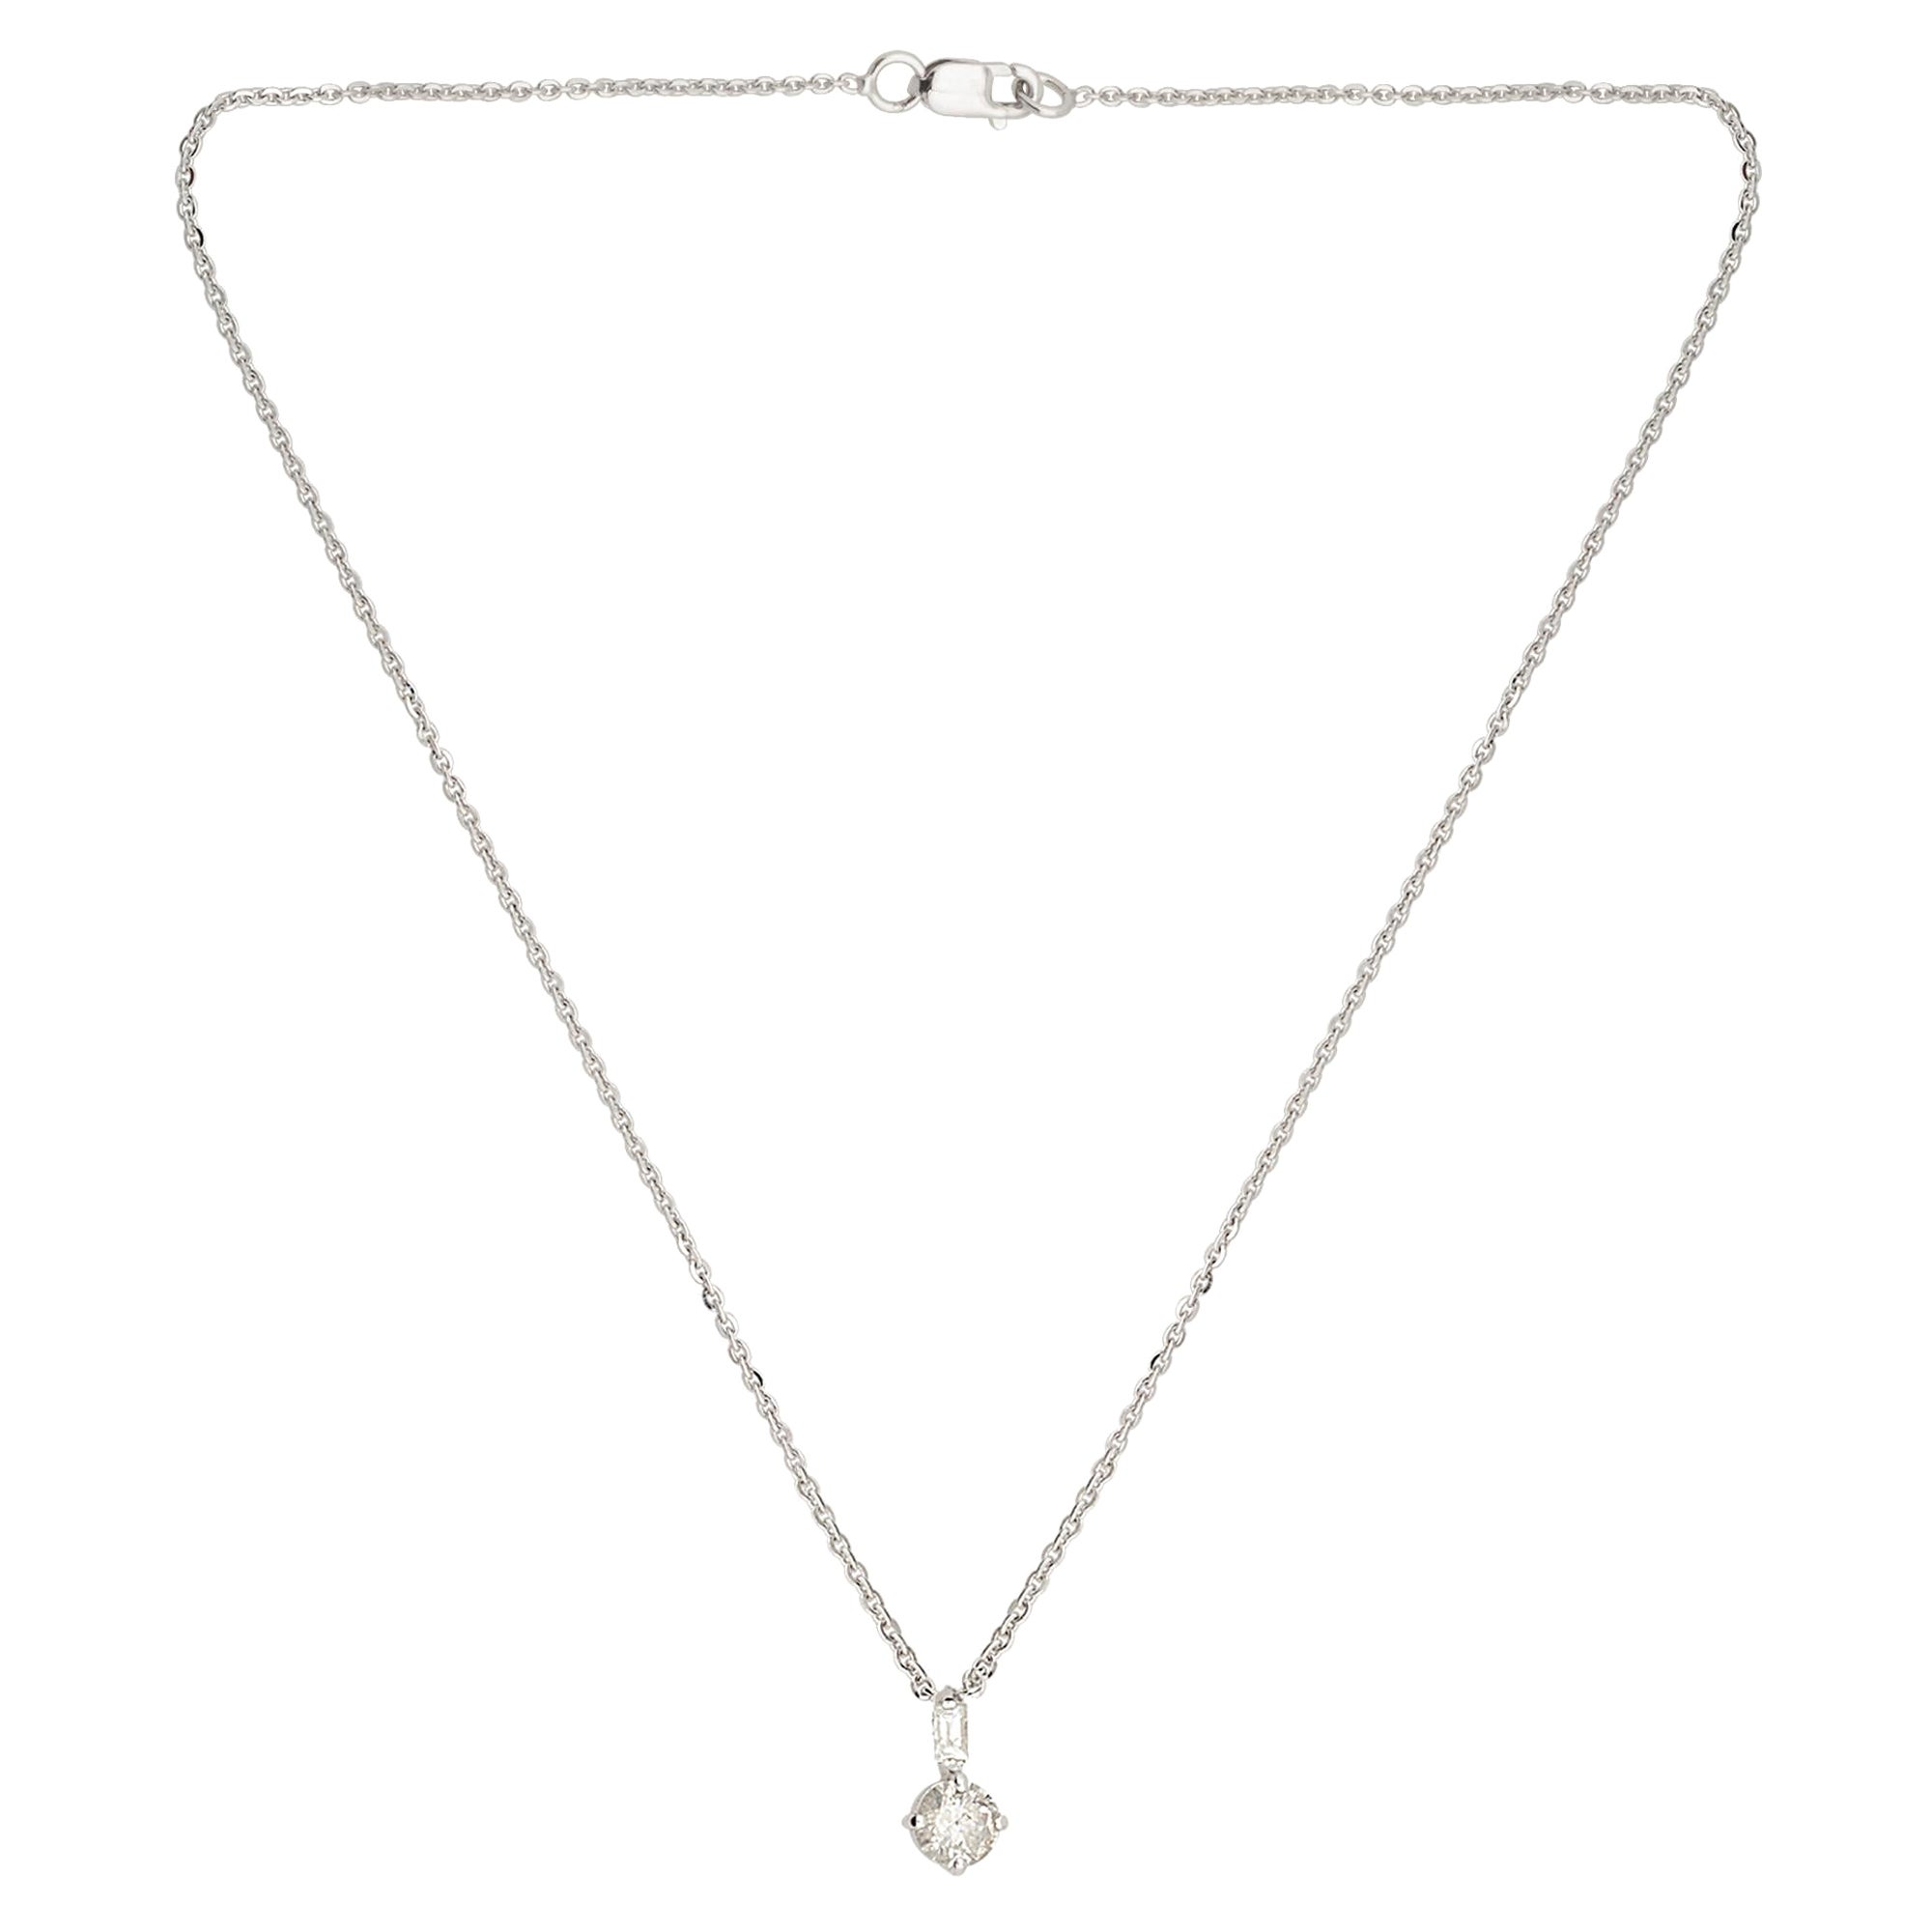 0.48 Carat Baguette Diamond Charm Pendant Necklace Solid 14k White Gold Jewelry